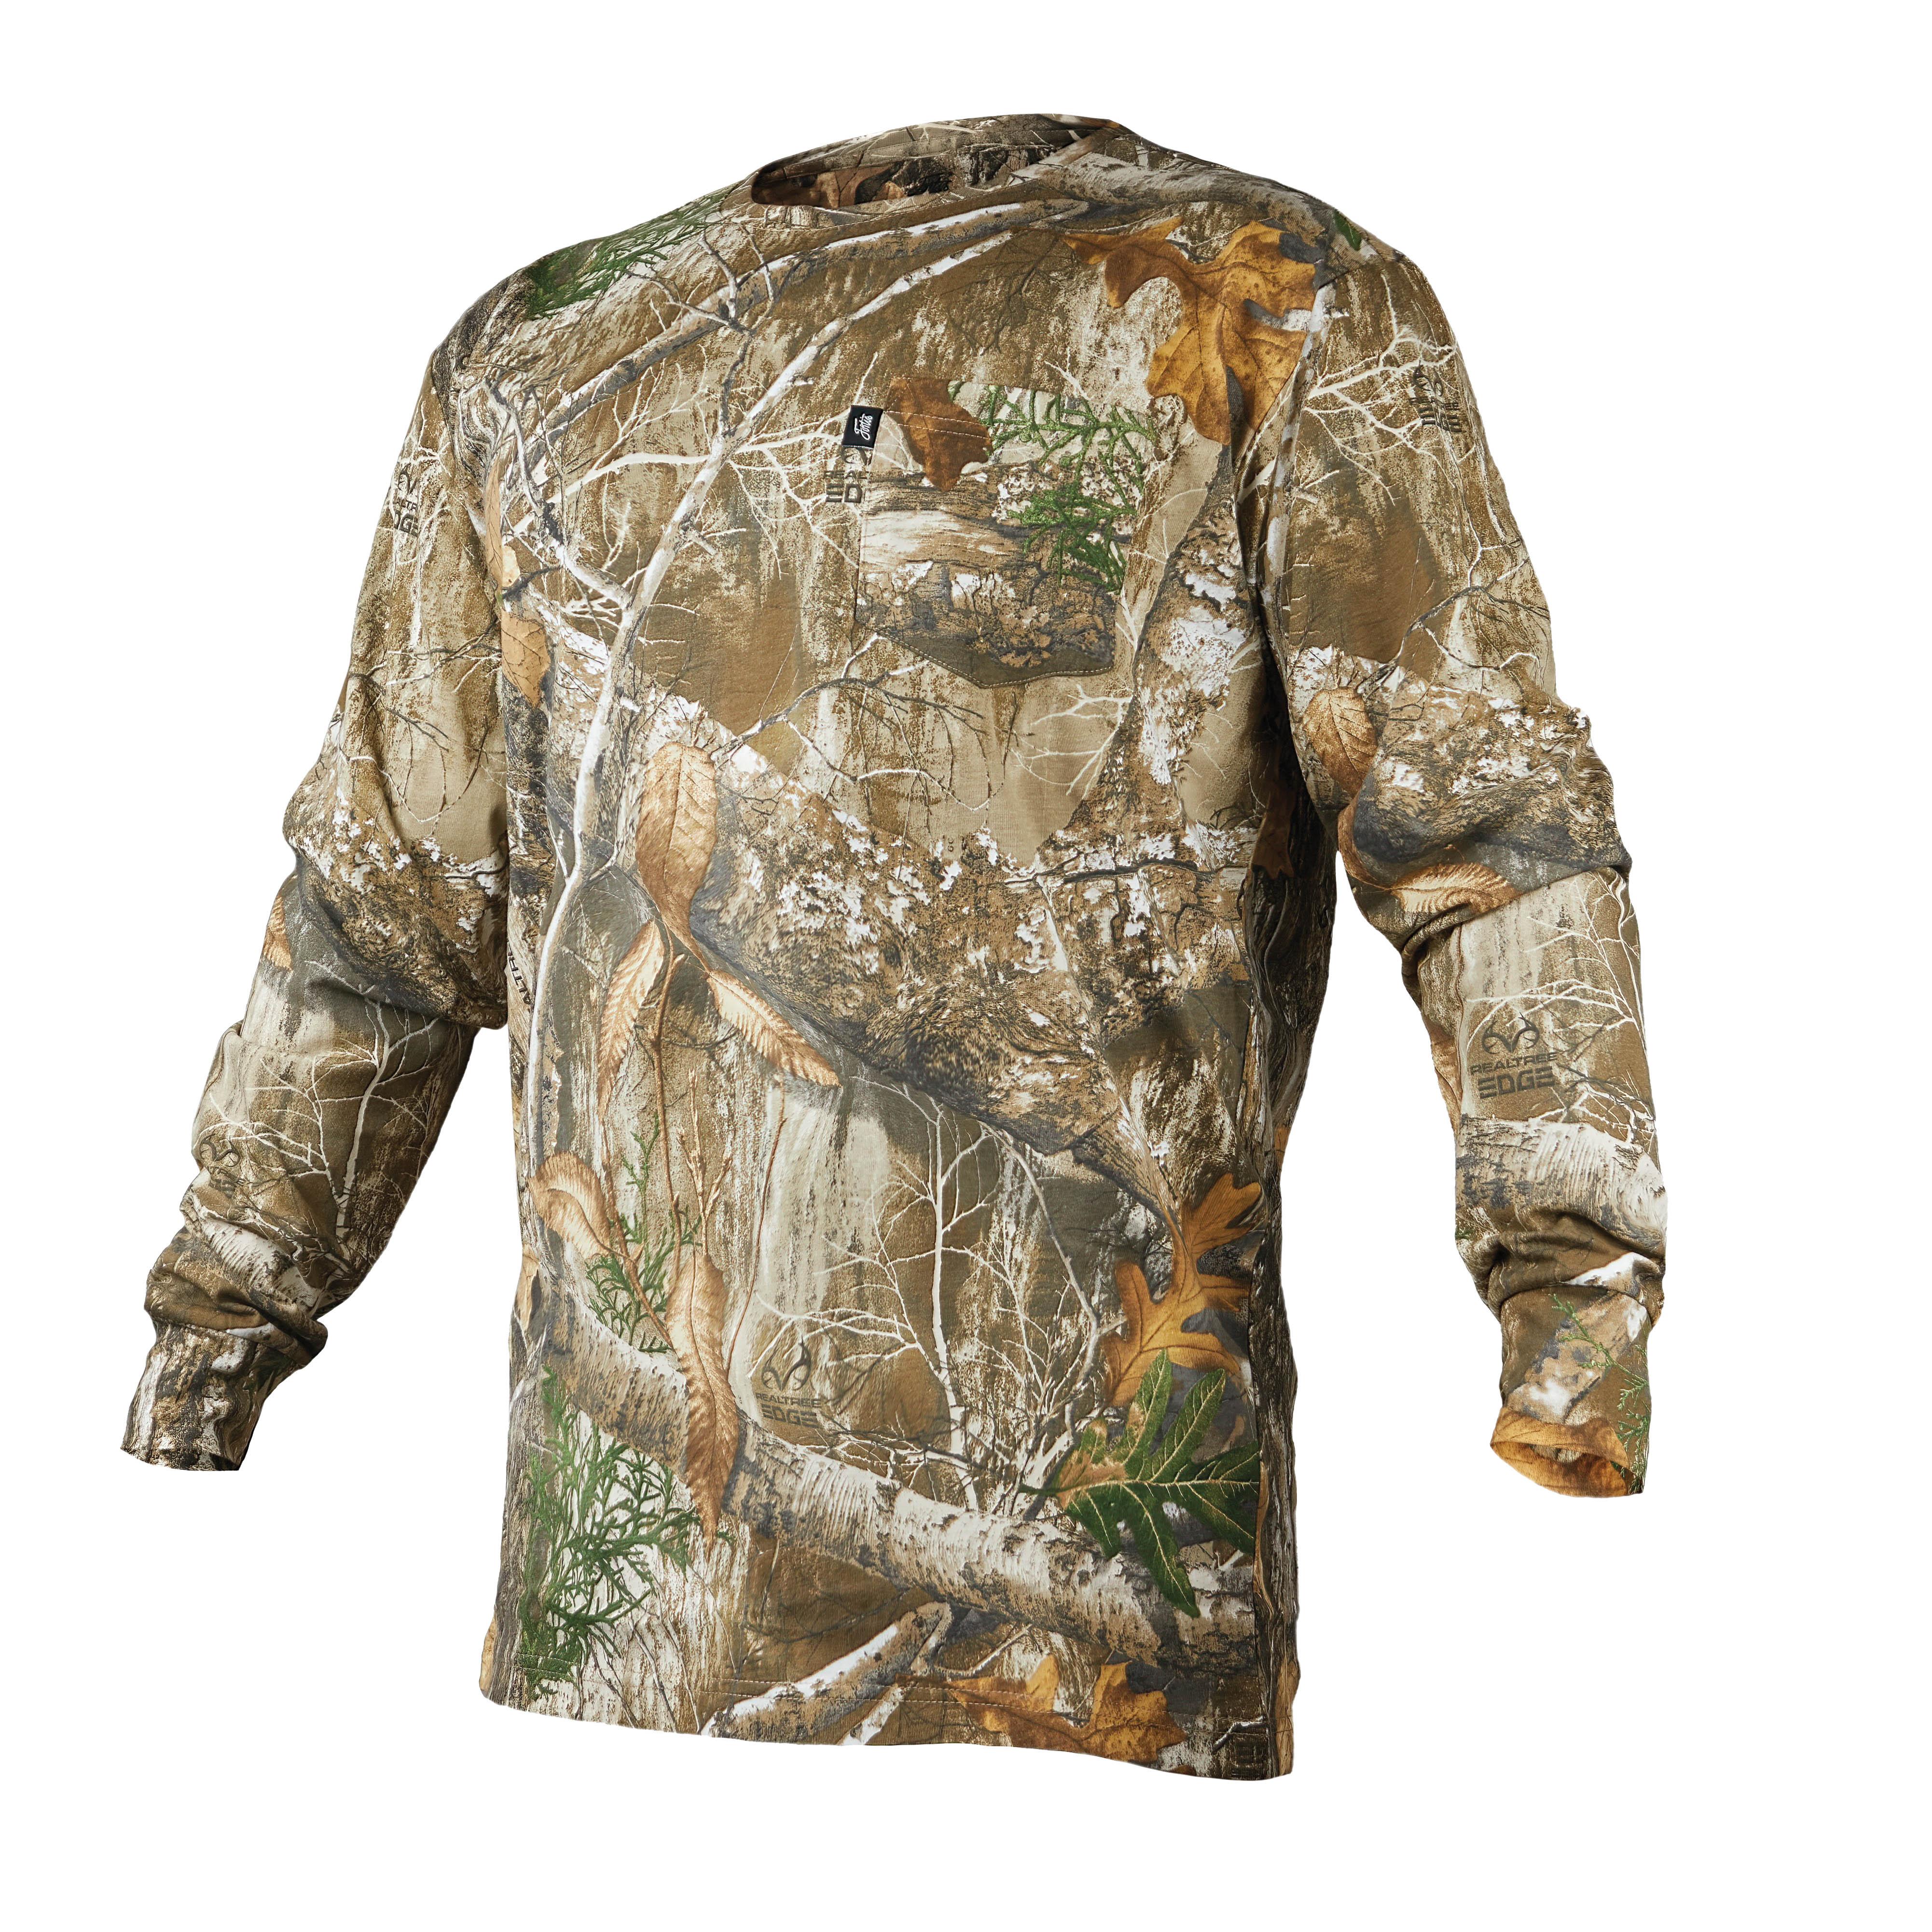 All Sizes FORTIS Fortis Carp Fishing Clothing Range Realtree Short Sleeved T-Shirt 